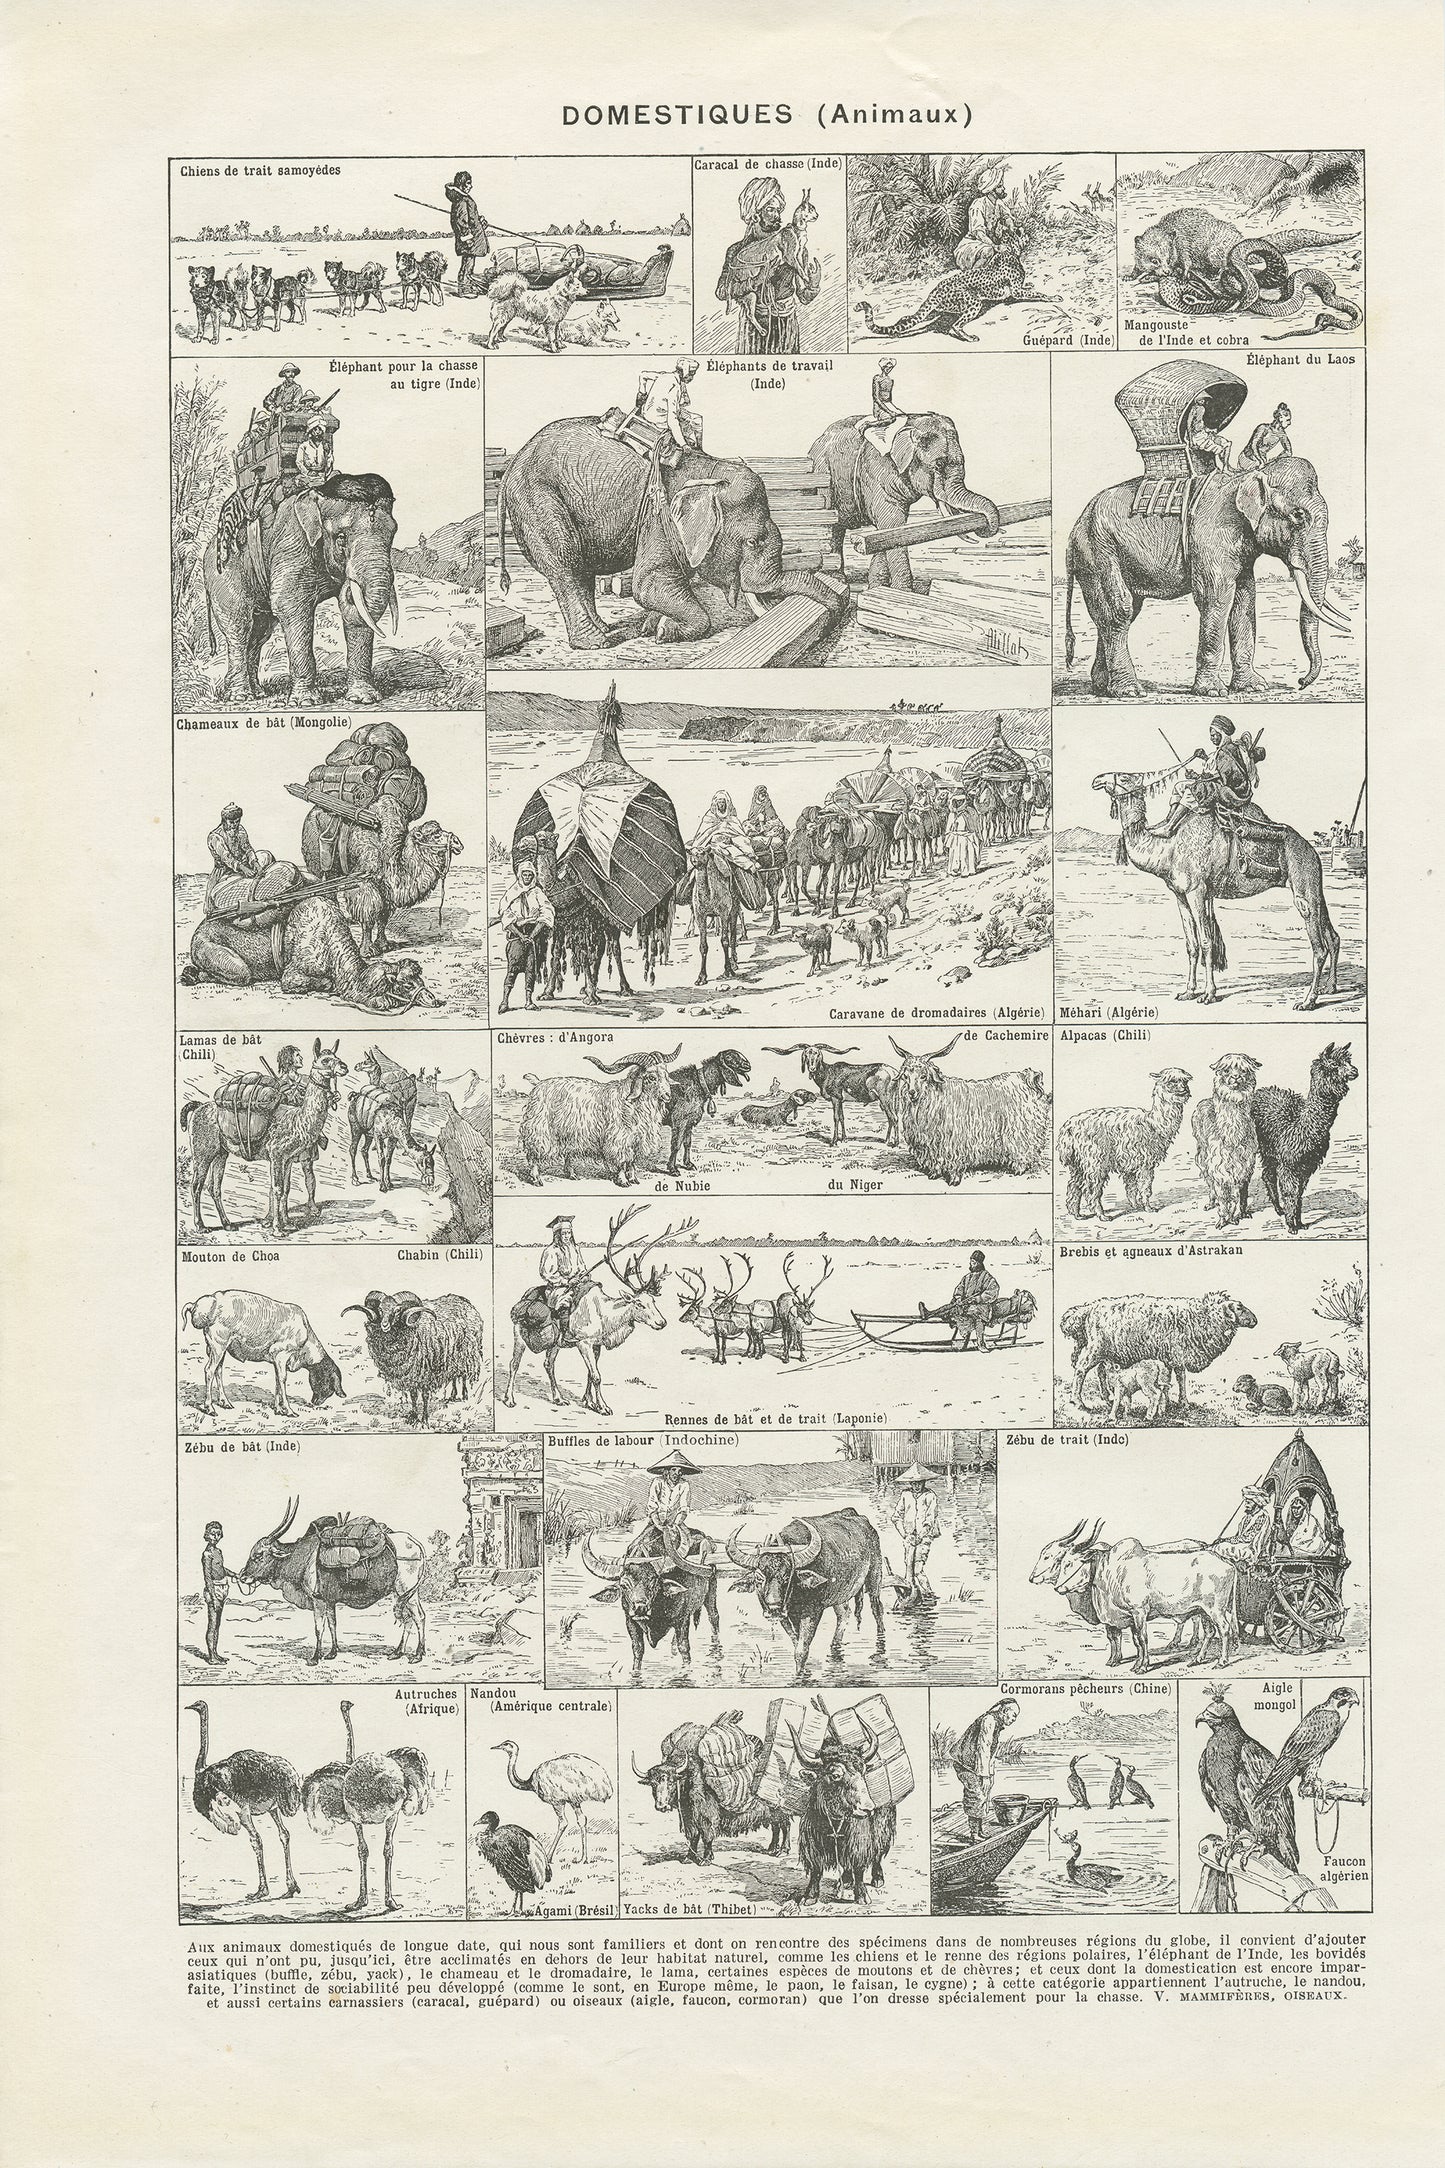 1948 Domesticated animals print